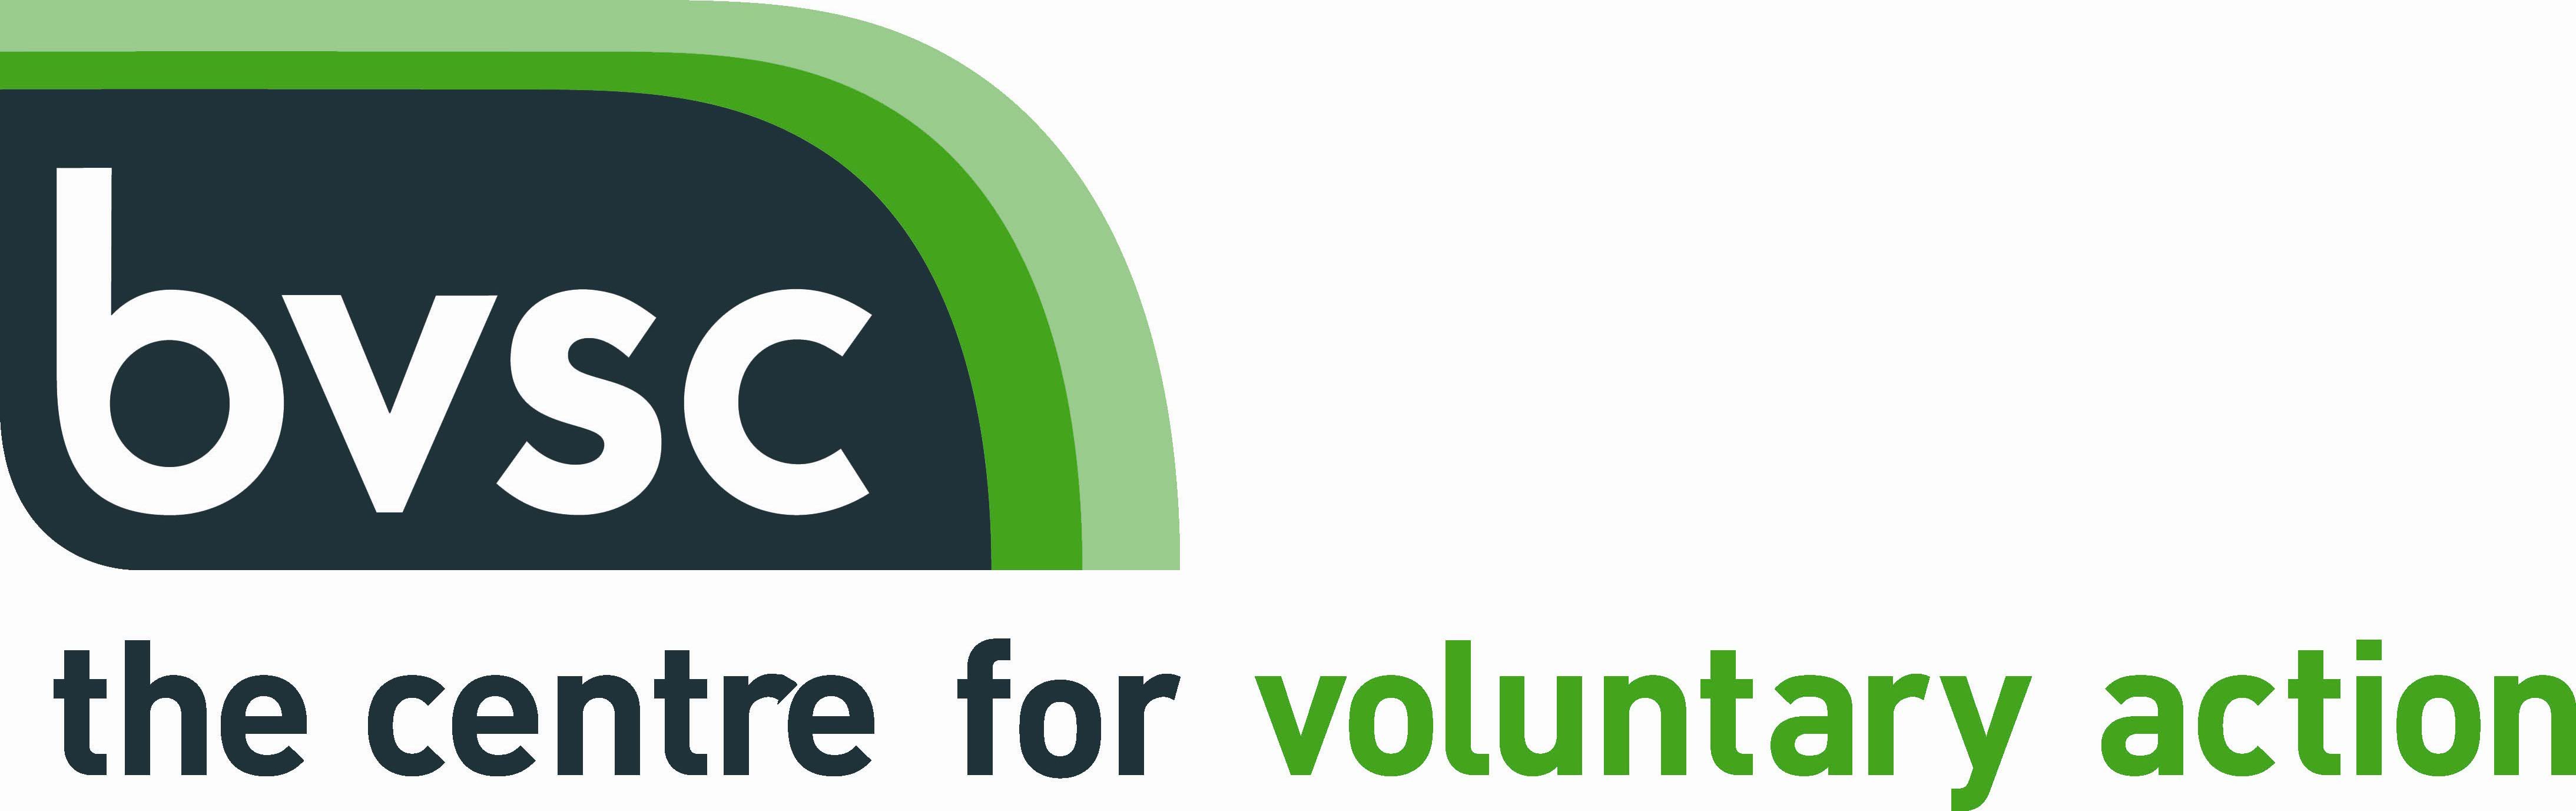 logo for Birmingham Voluntary Service Council (BVSC)